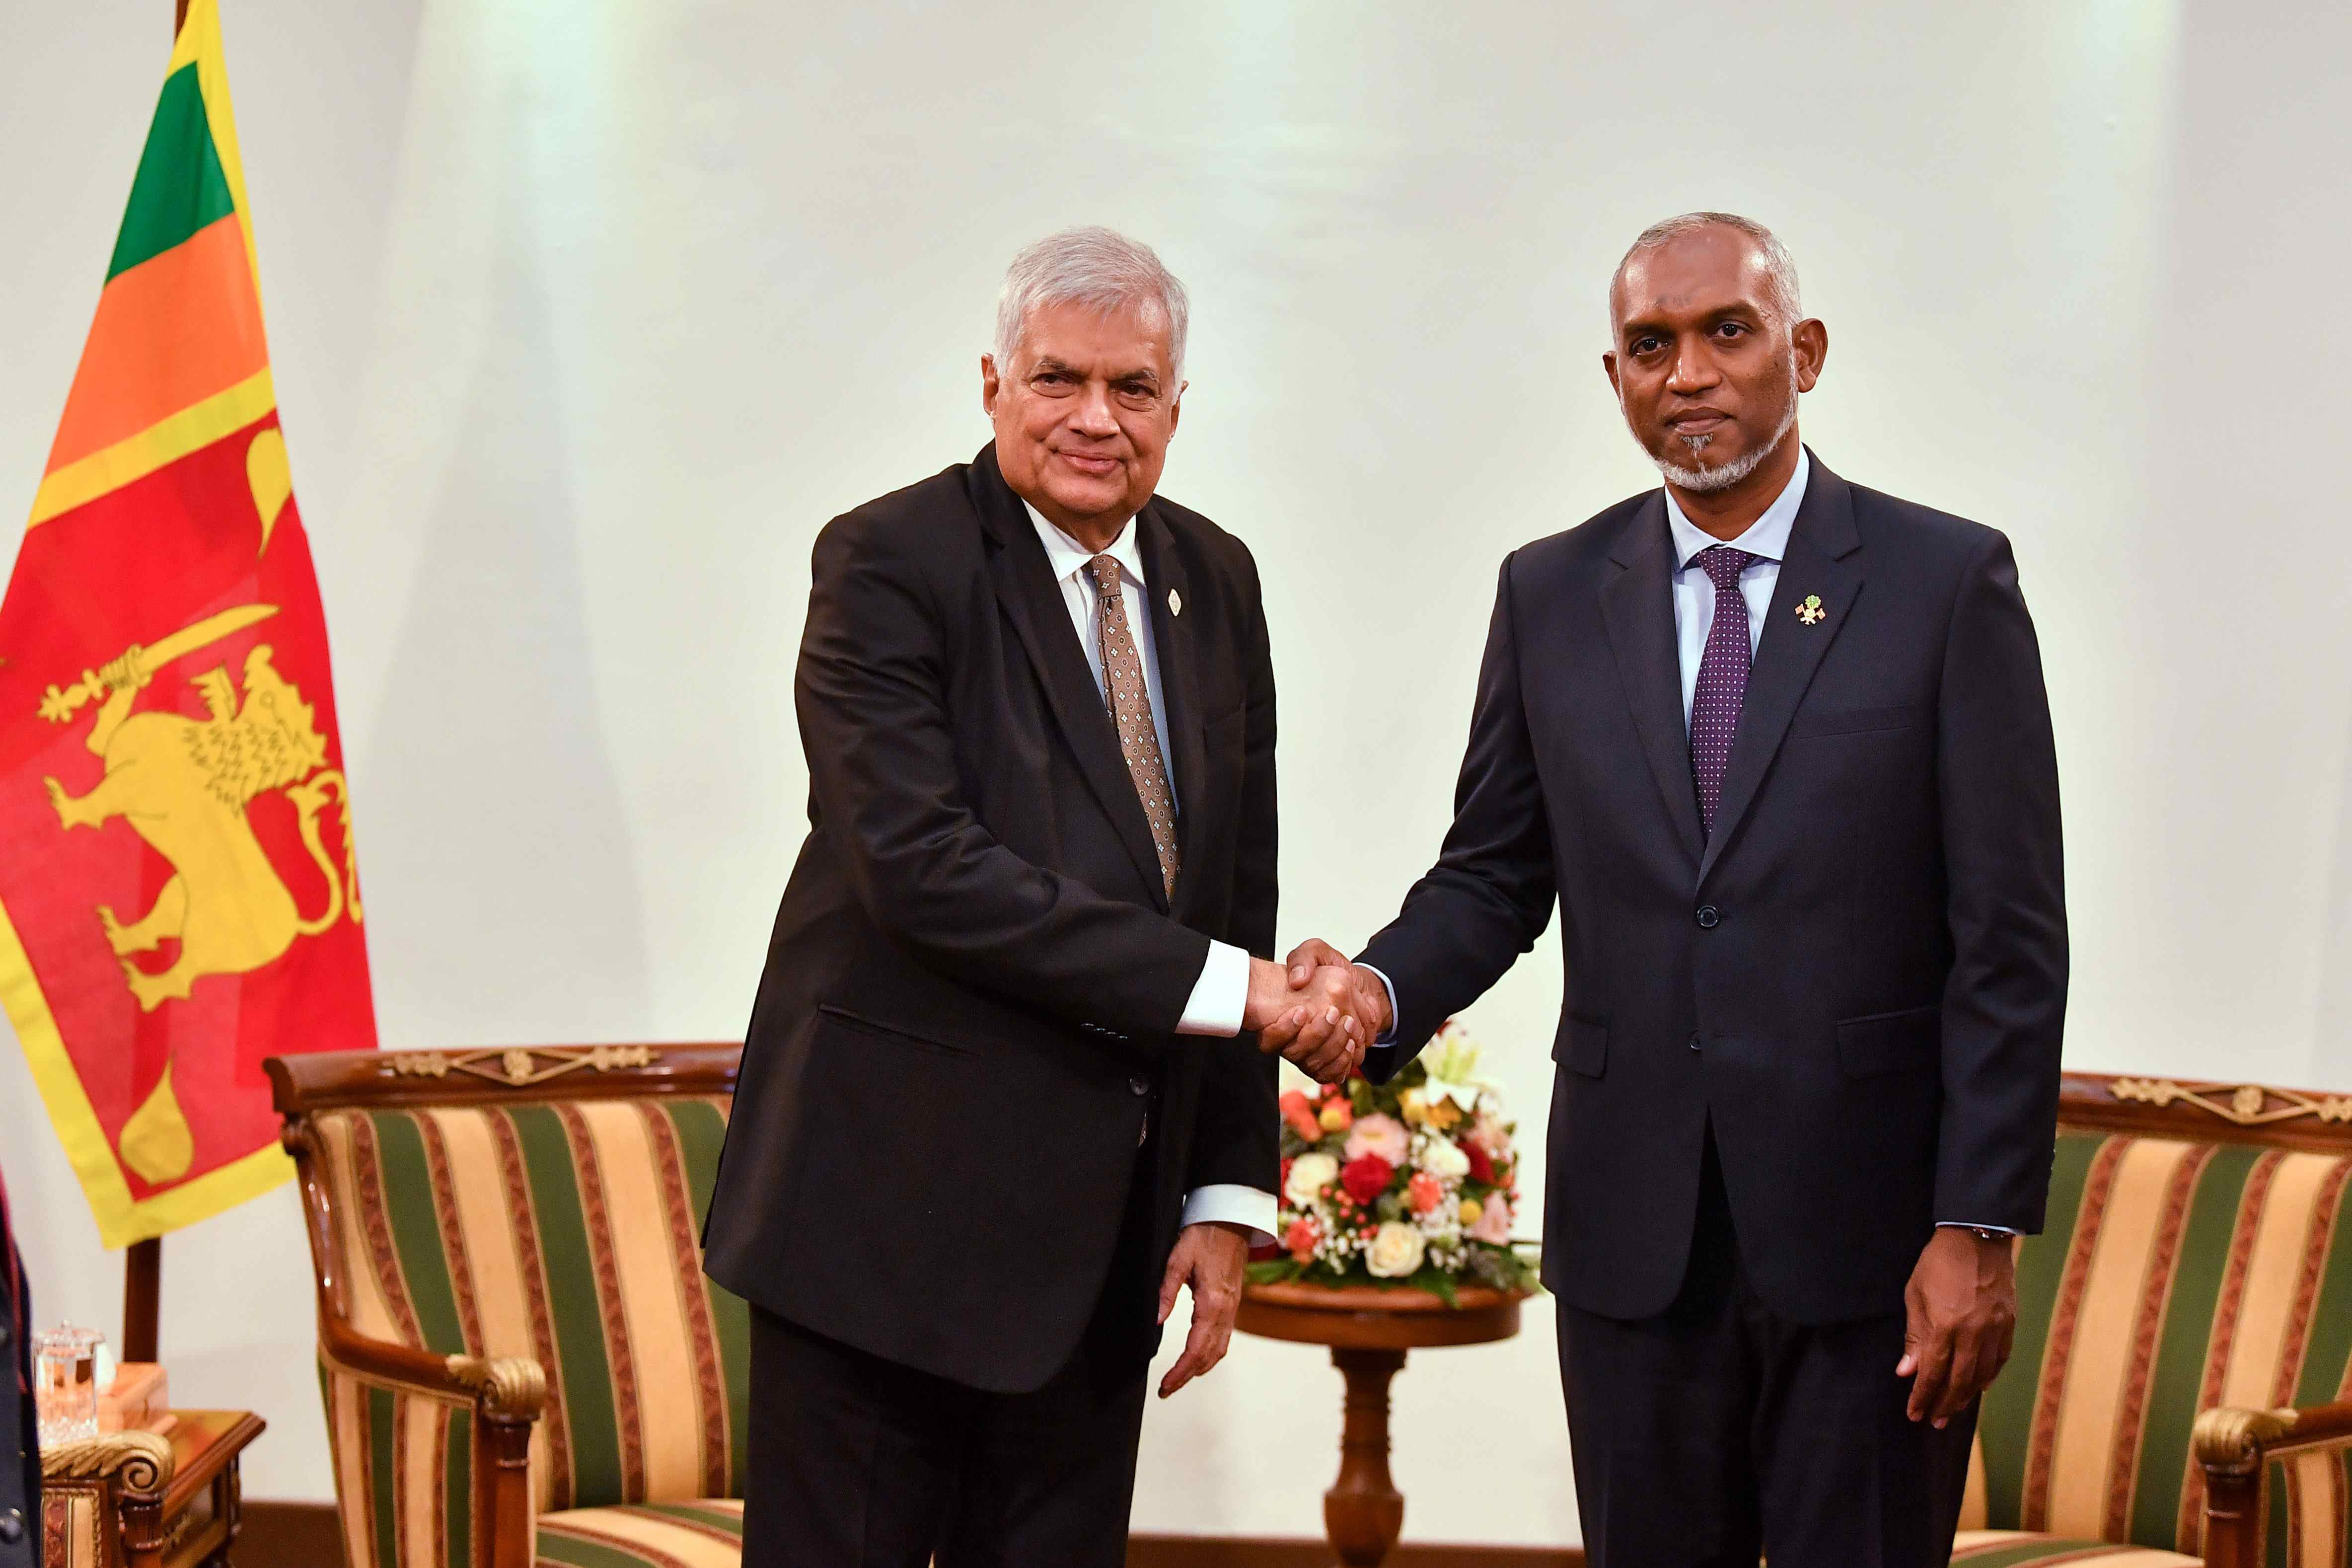 President Dr Muizzu meeting Sri Lankan President Ranil Wickremesinghe after the Presidential Inauguration.